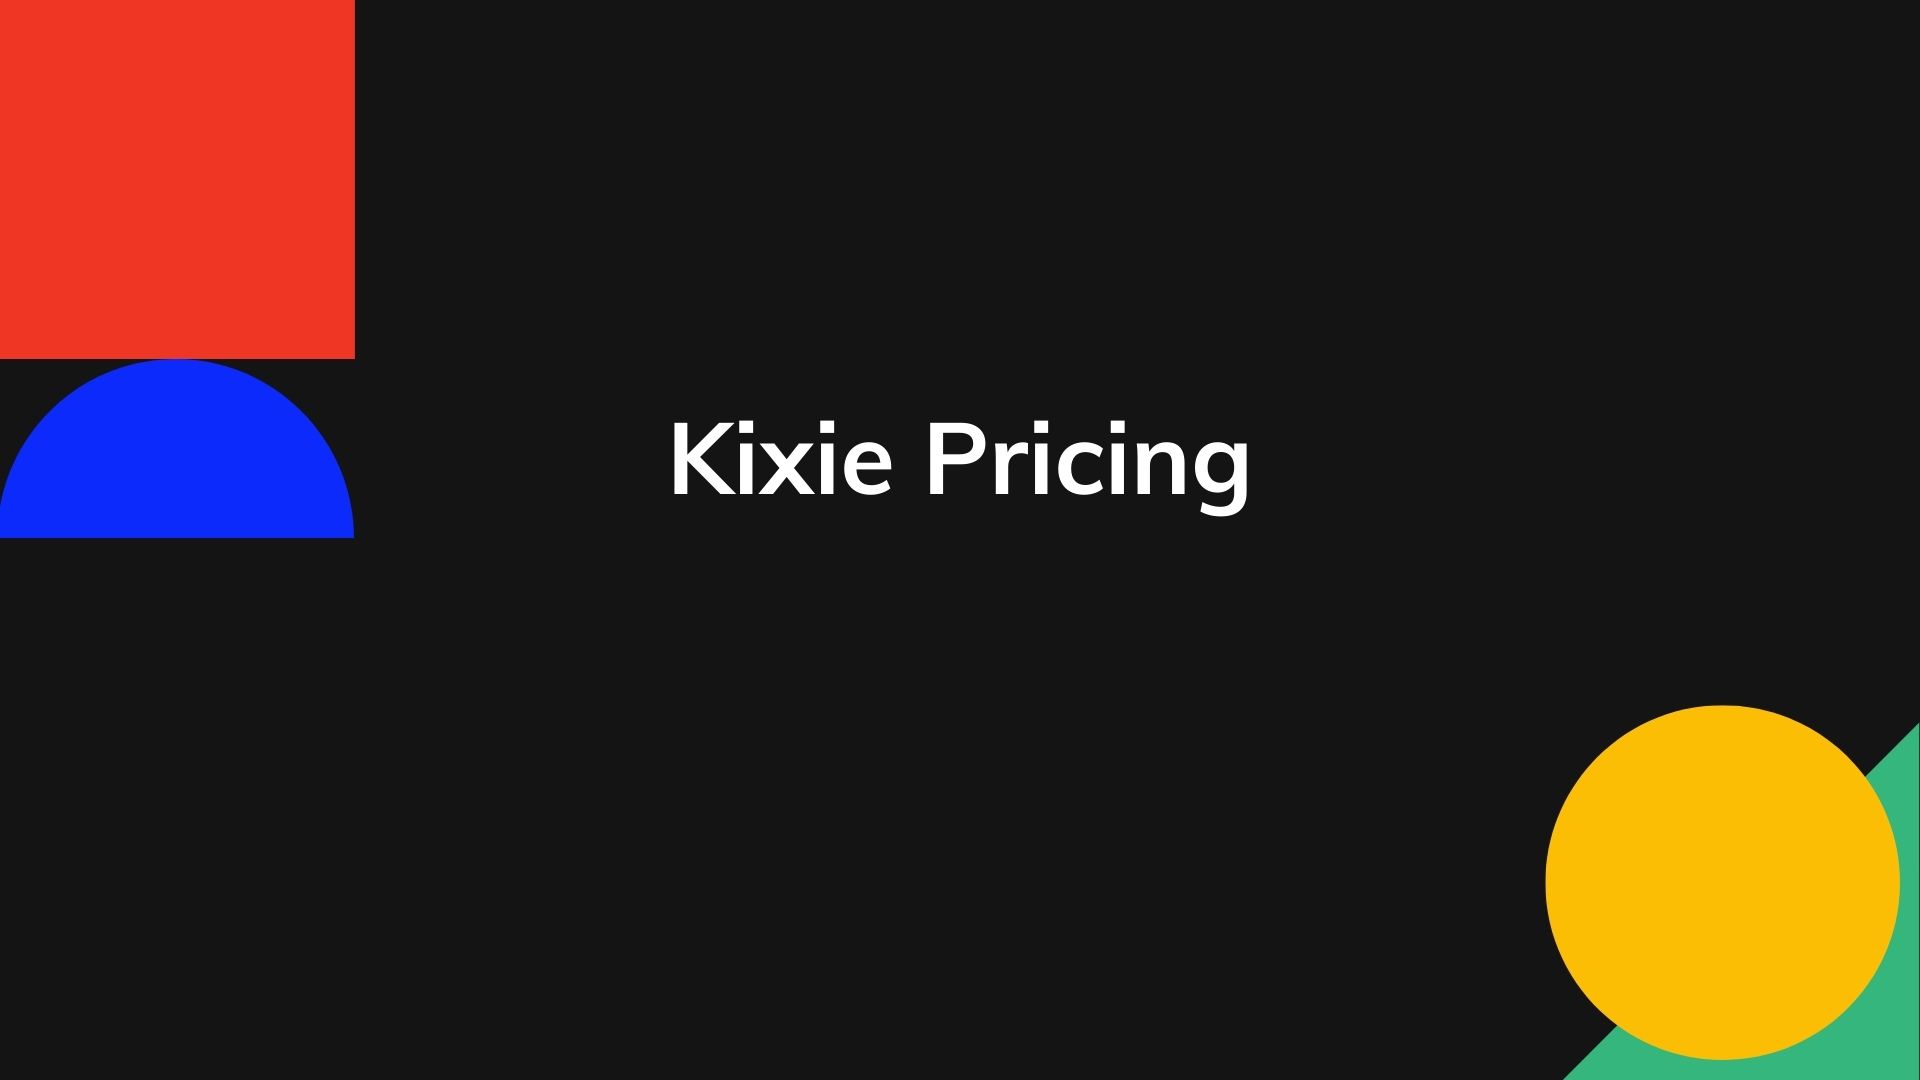 Kixie Pricing